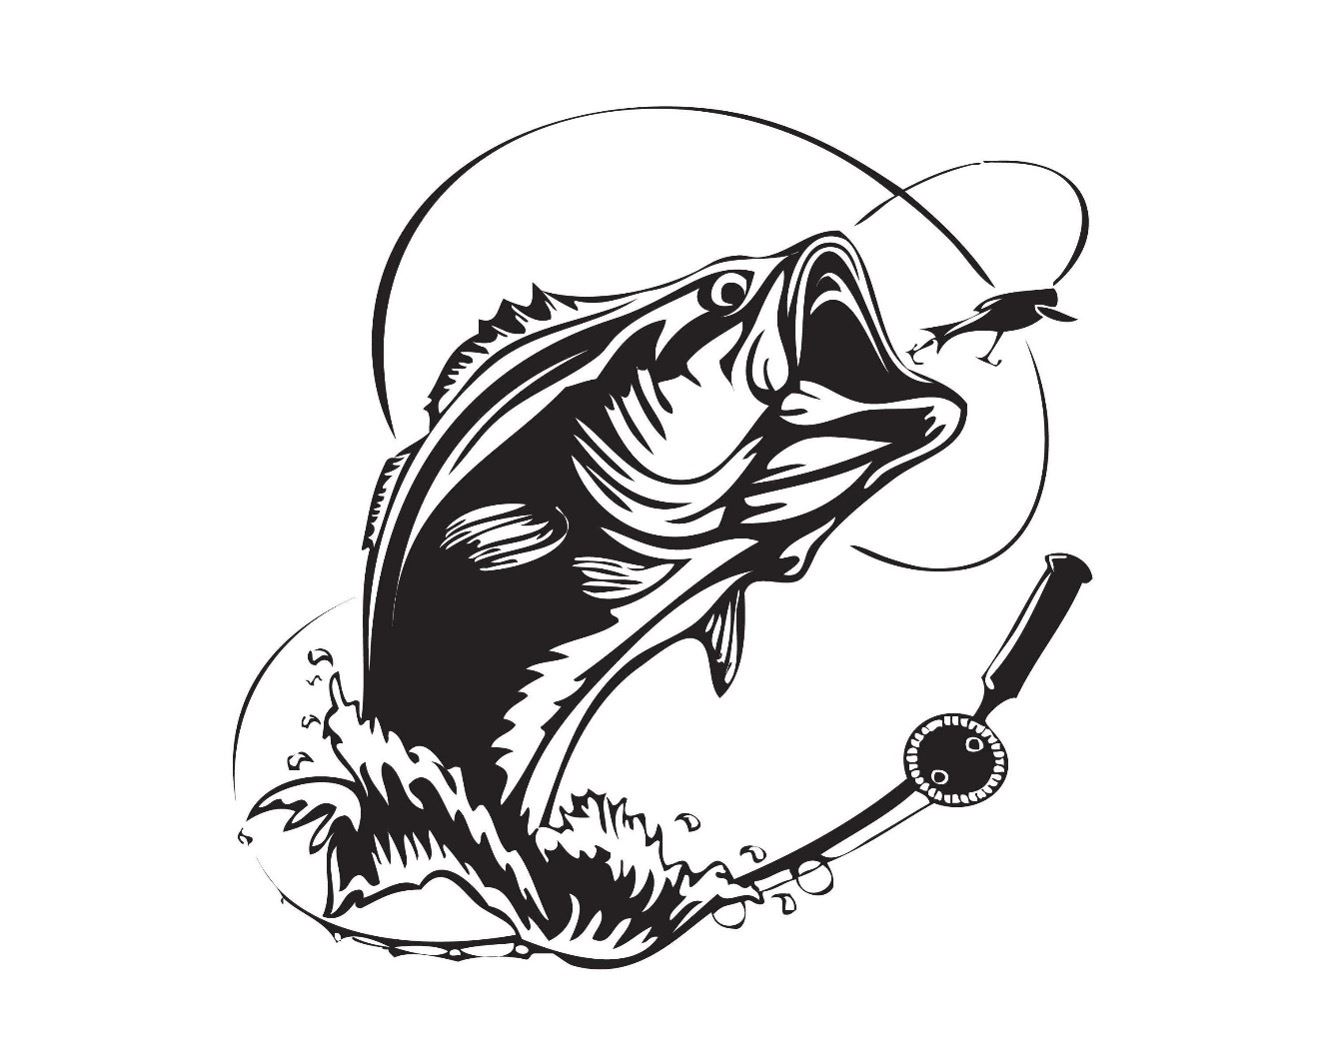 Bass Fishing / Homepage